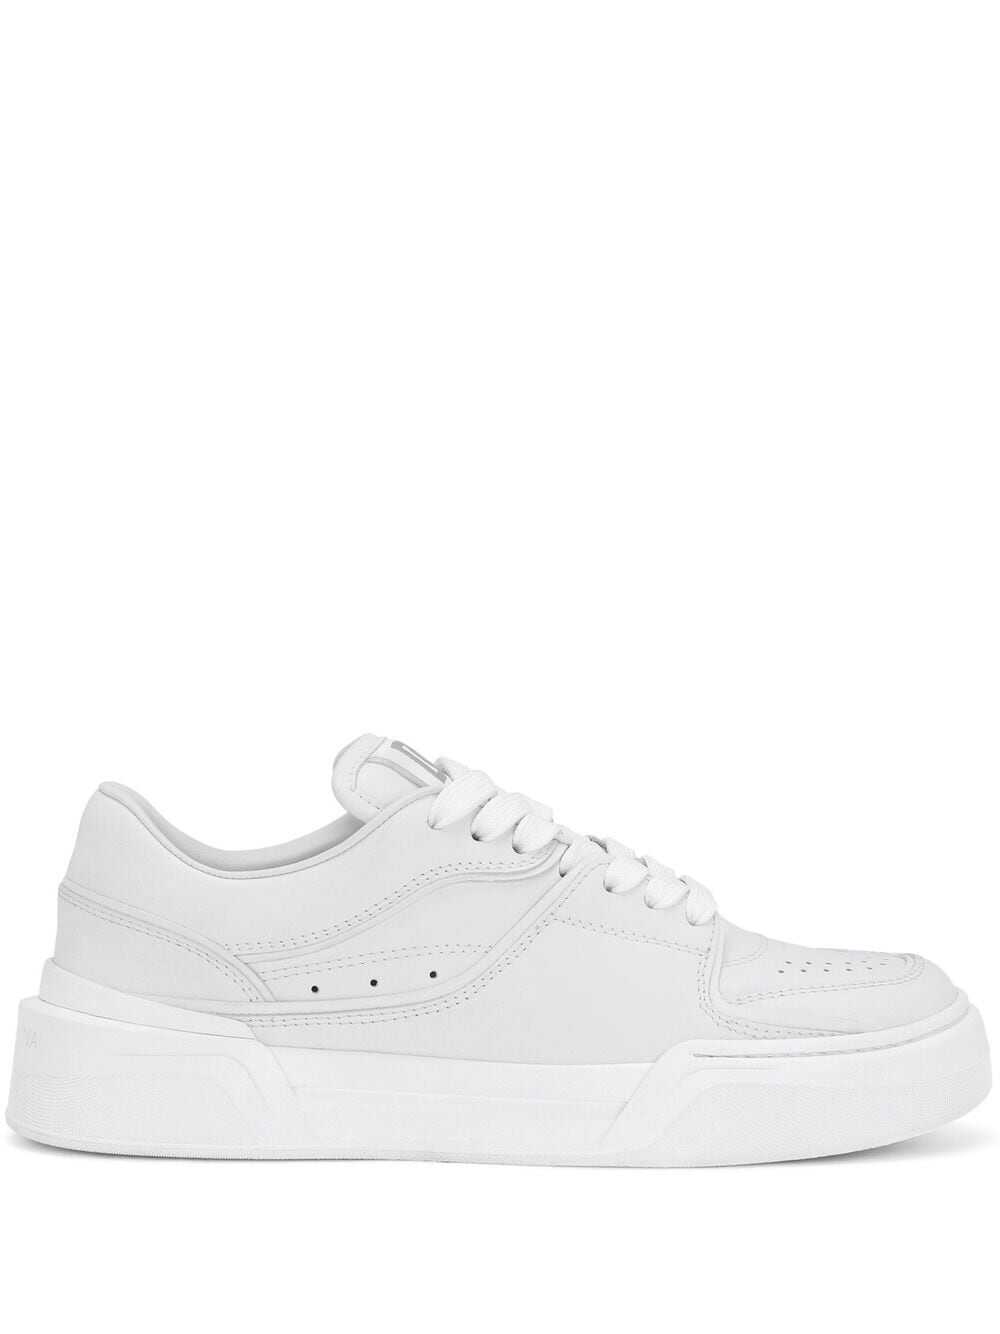 Dolce & Gabbana Sneakers White White image9